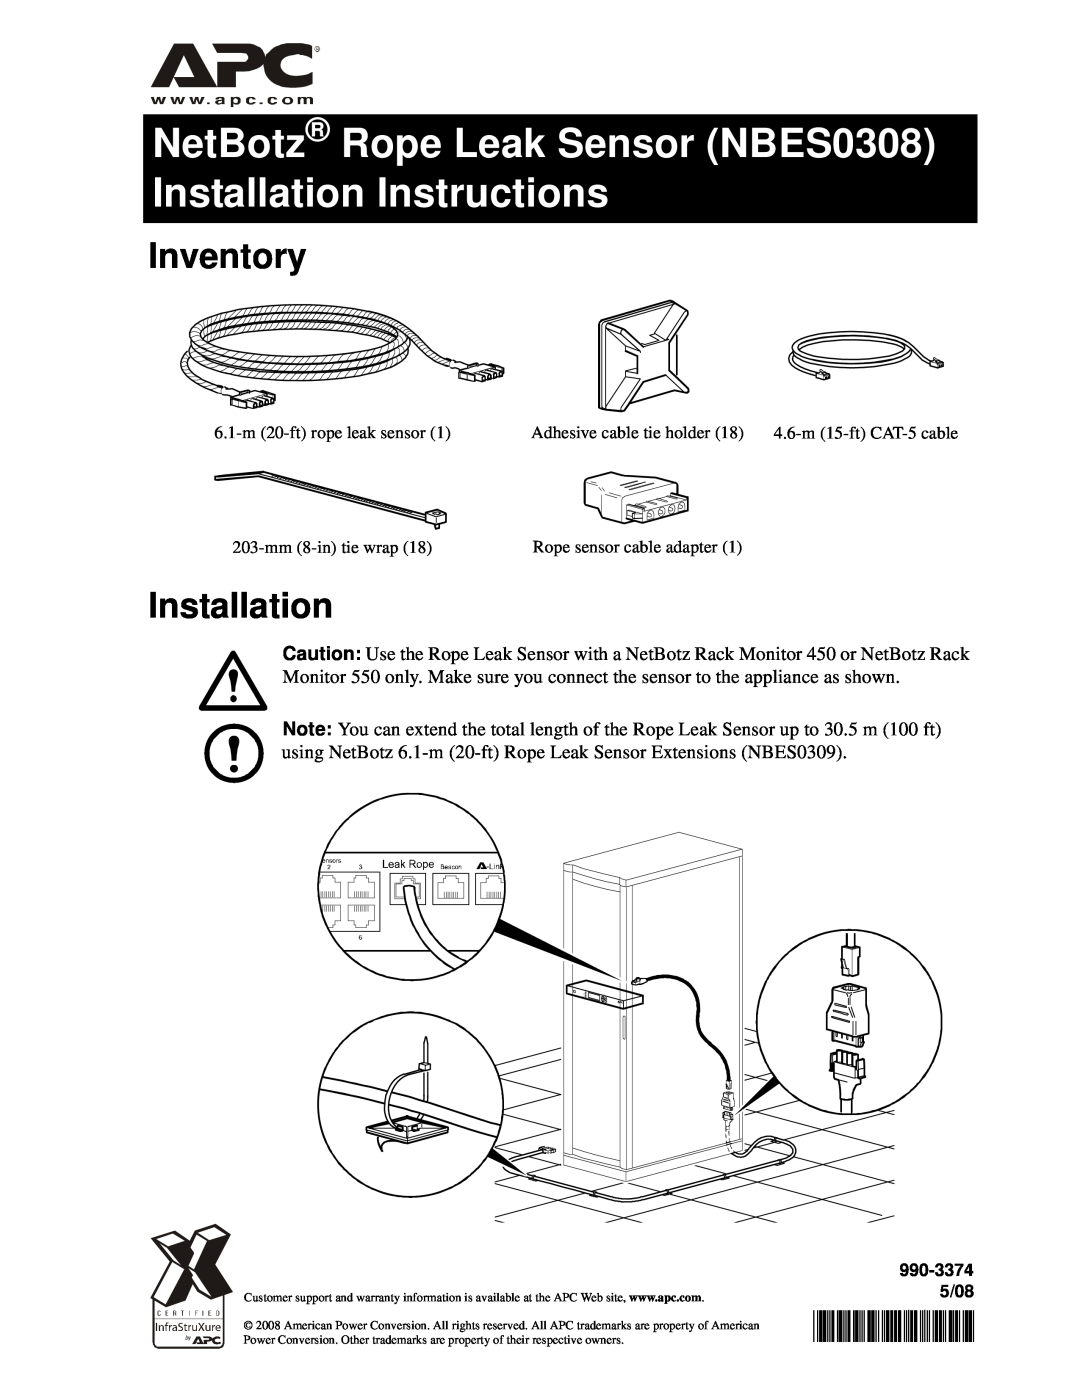 APC installation instructions 990-3374, NetBotz Rope Leak Sensor NBES0308 Installation Instructions, Inventory 